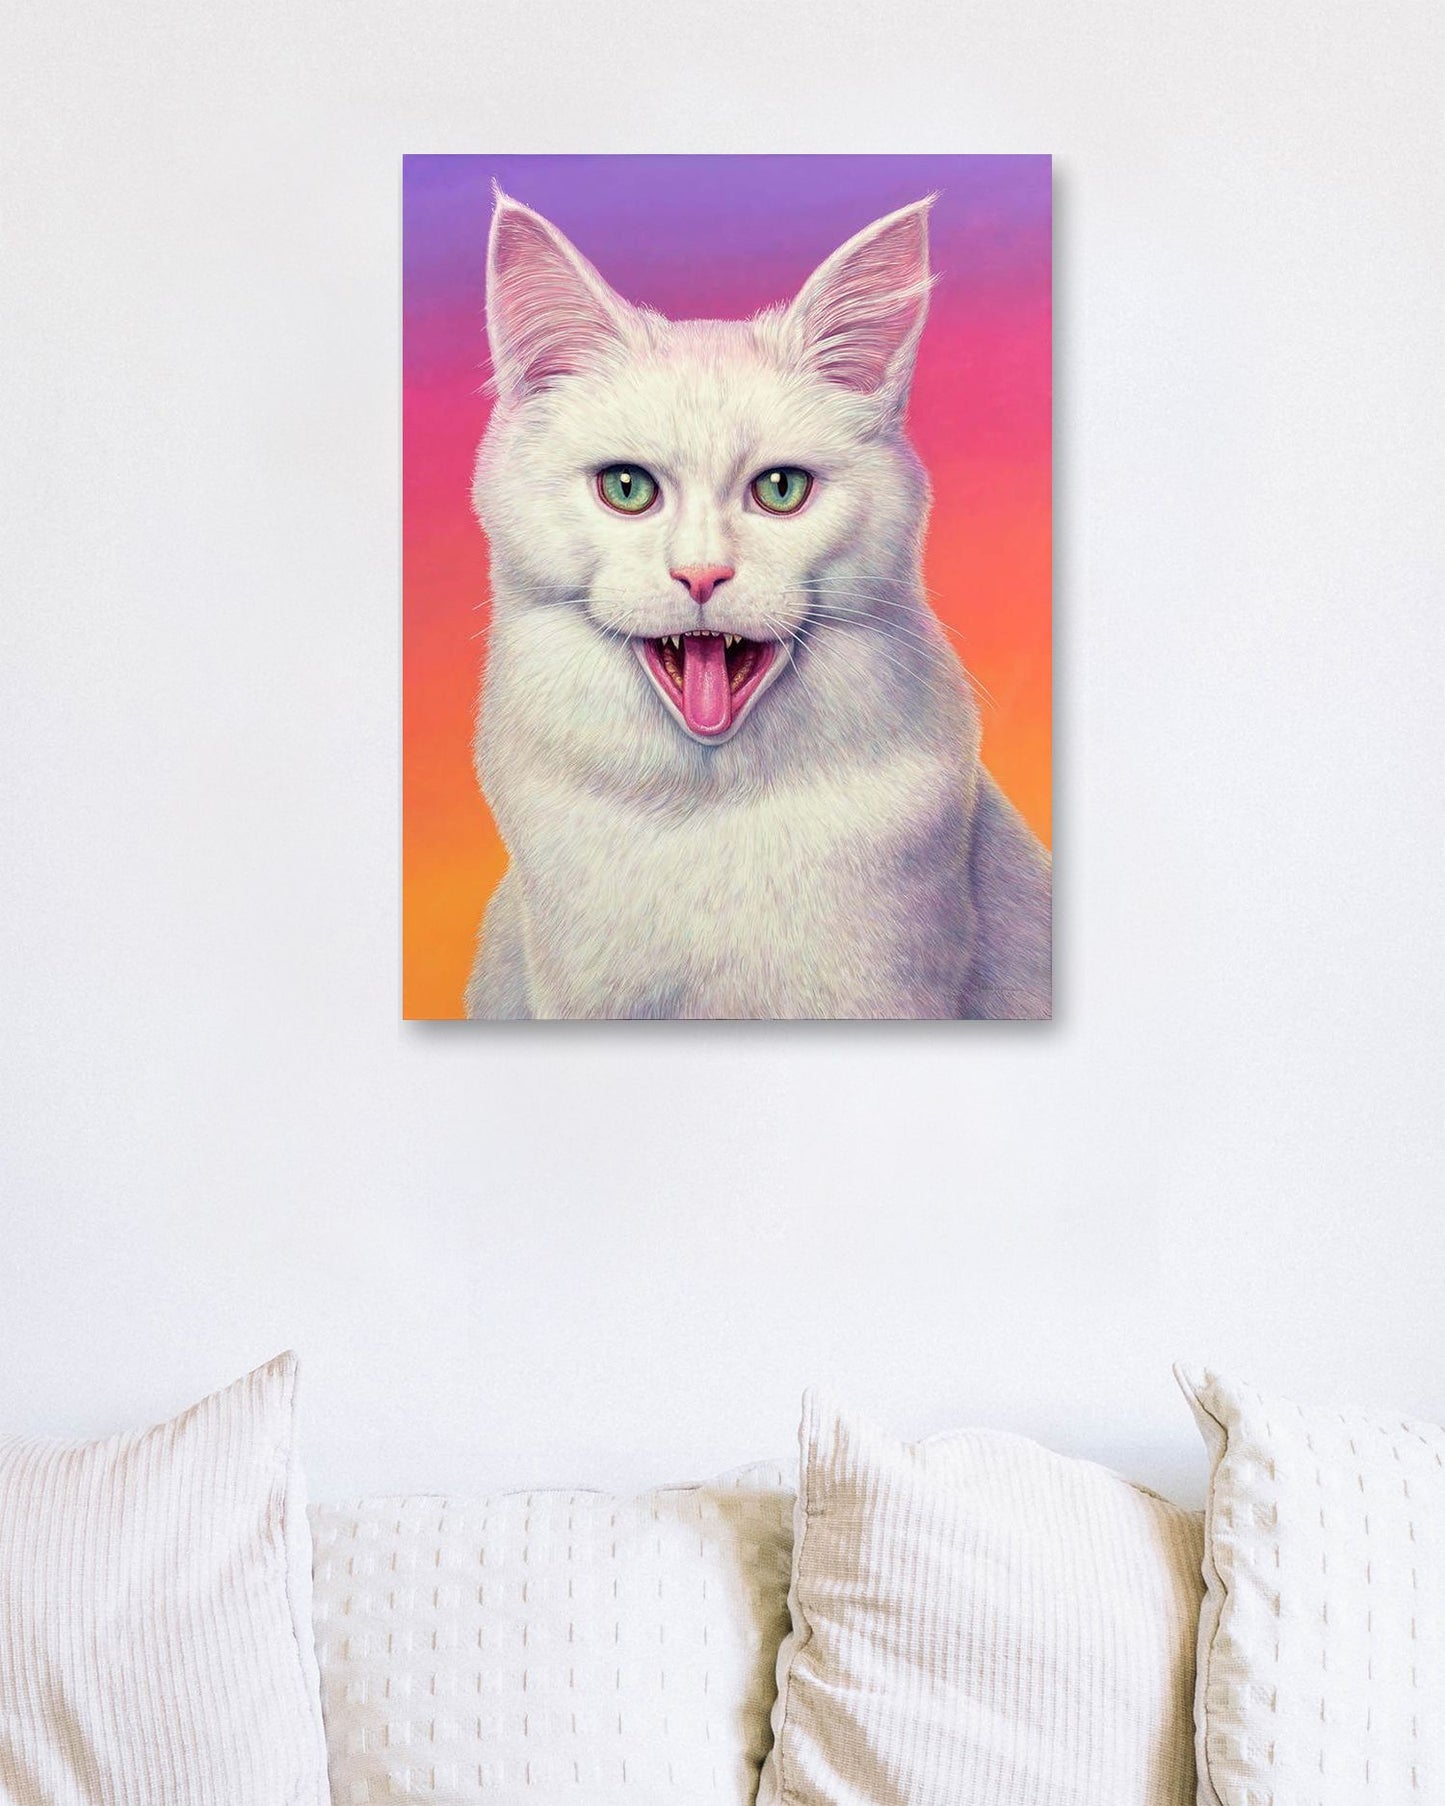 Crazy White Cat - @chusna